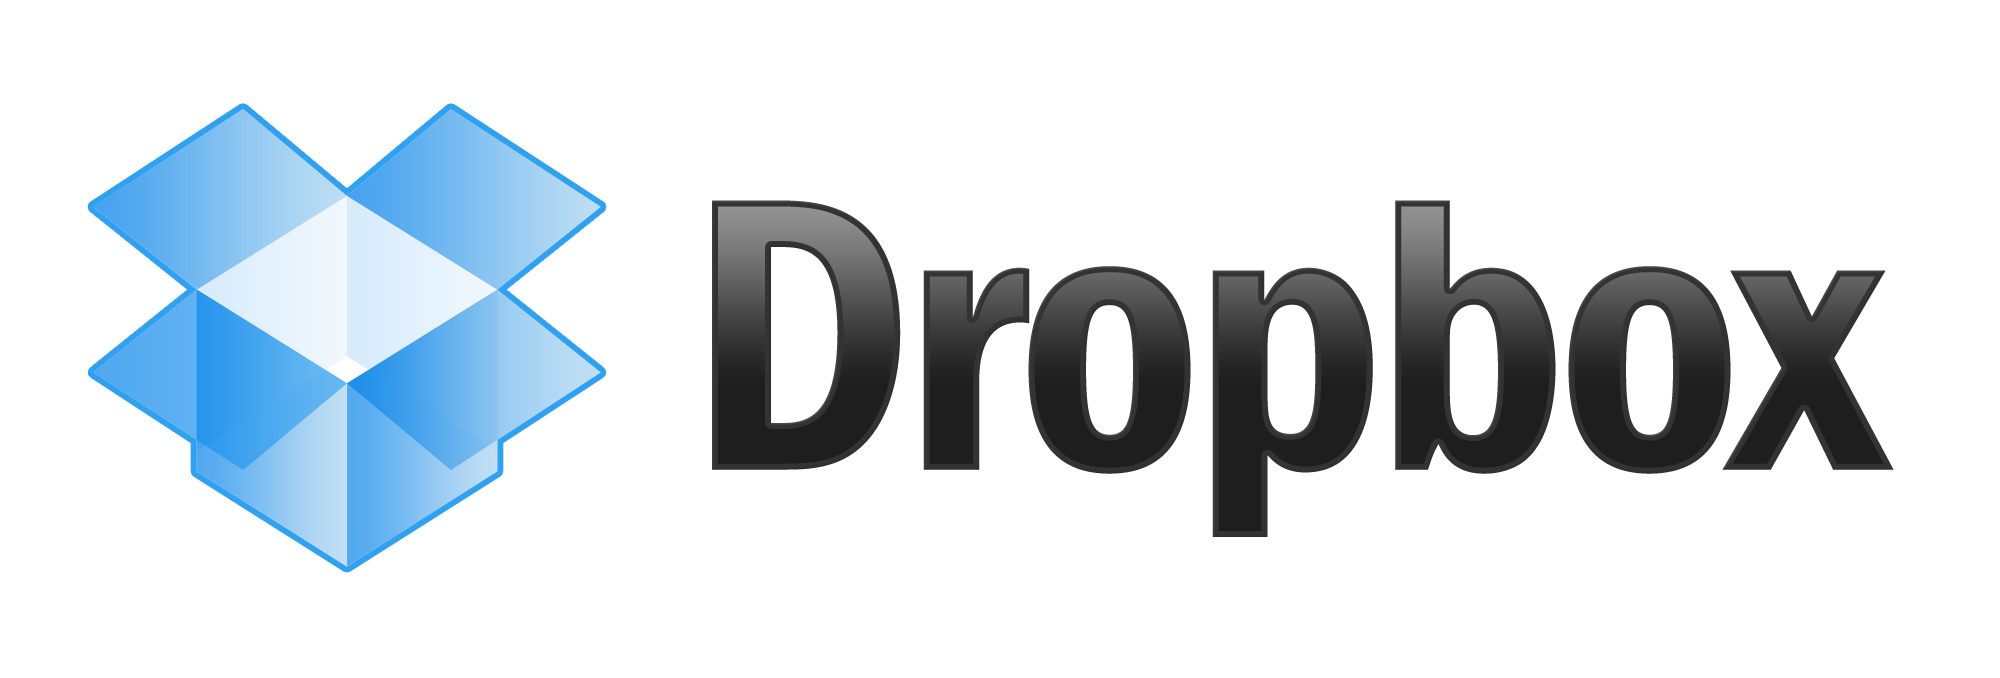 Dropbox_Logo1